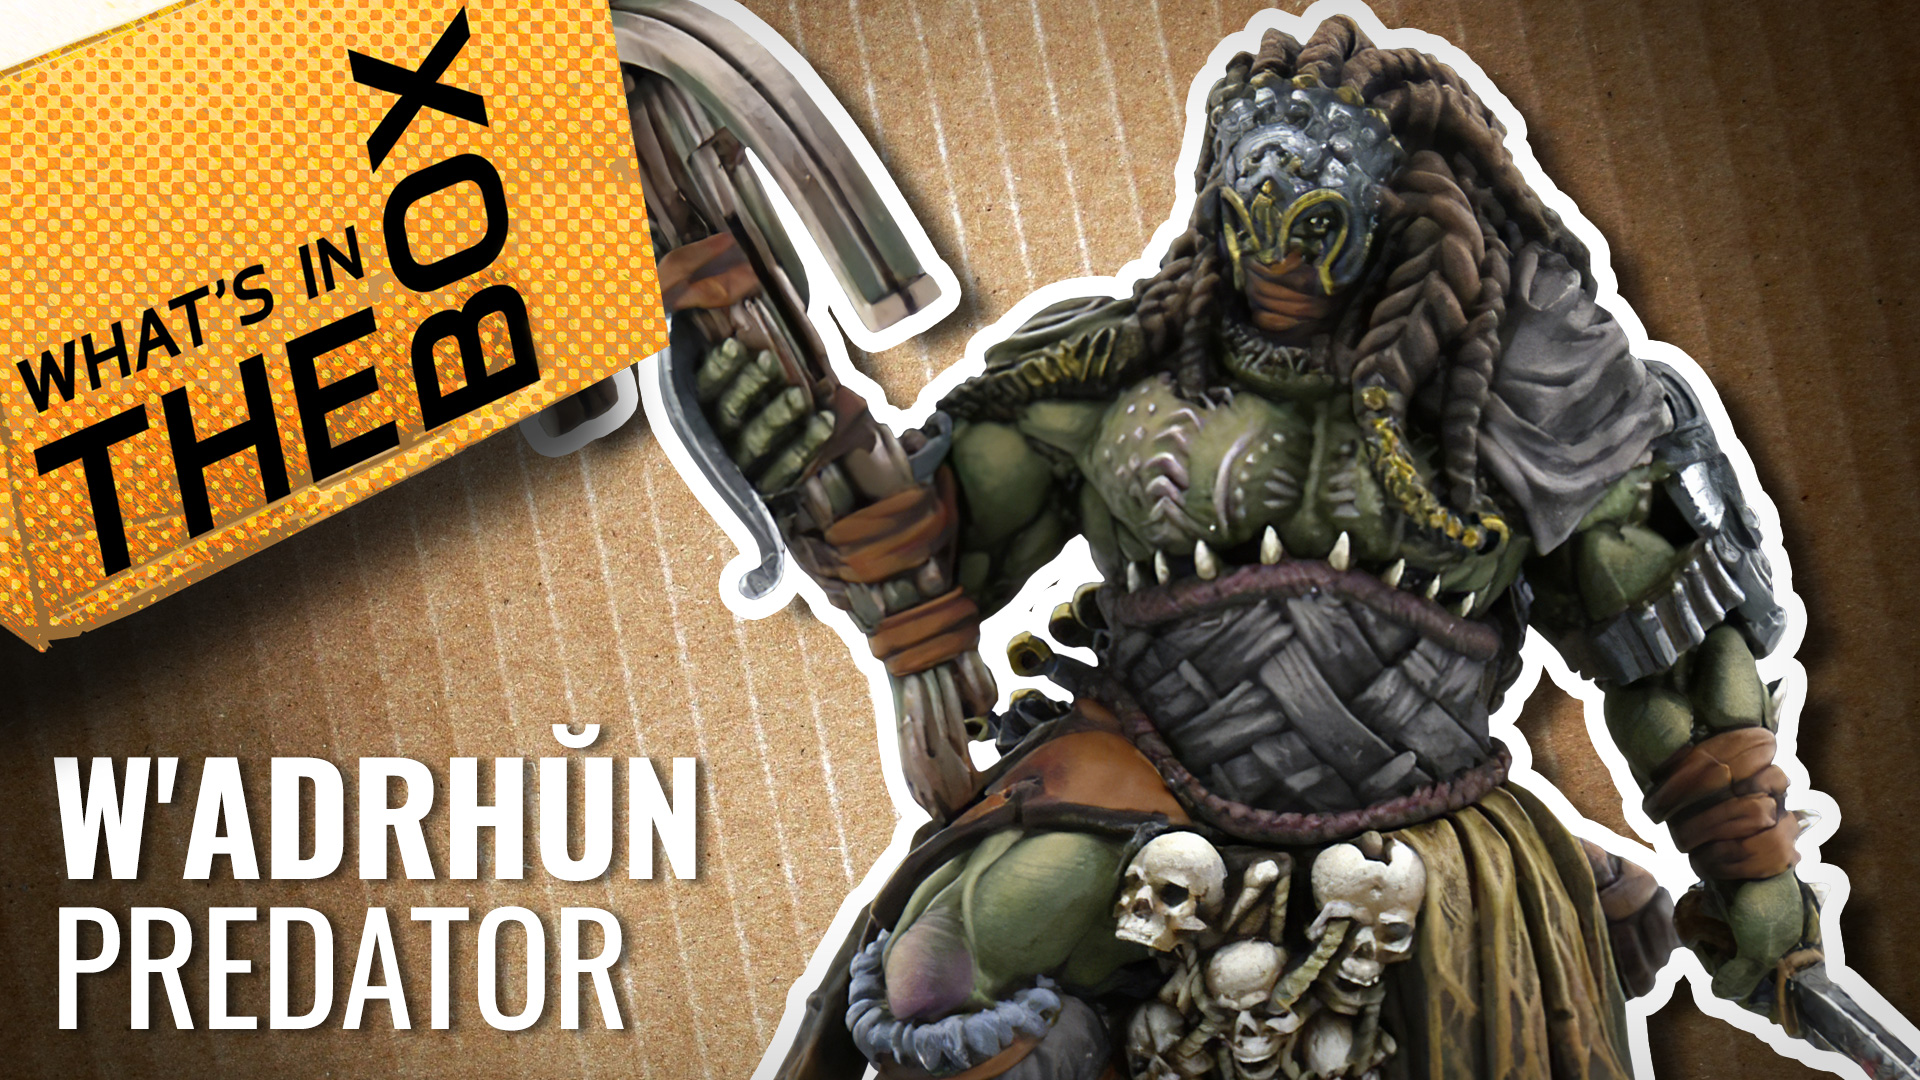 Wadrhun-Predator-coverimage